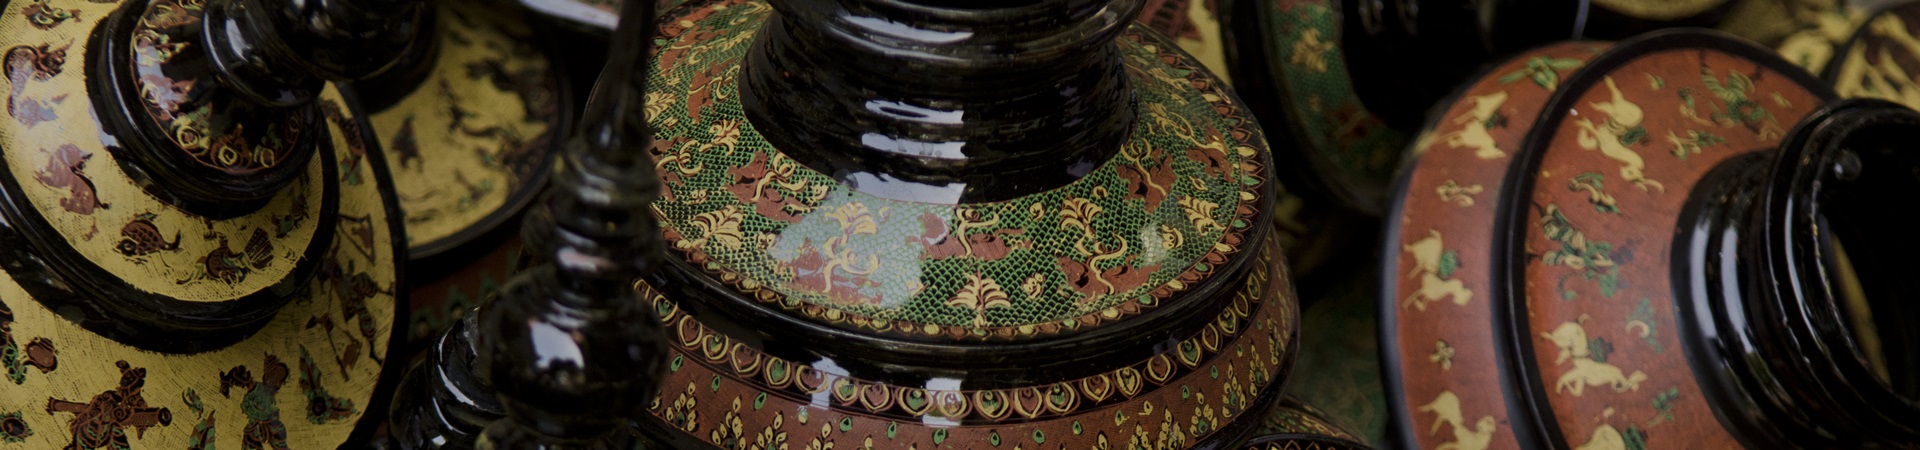 Image of Painting lacquerware in Bagan